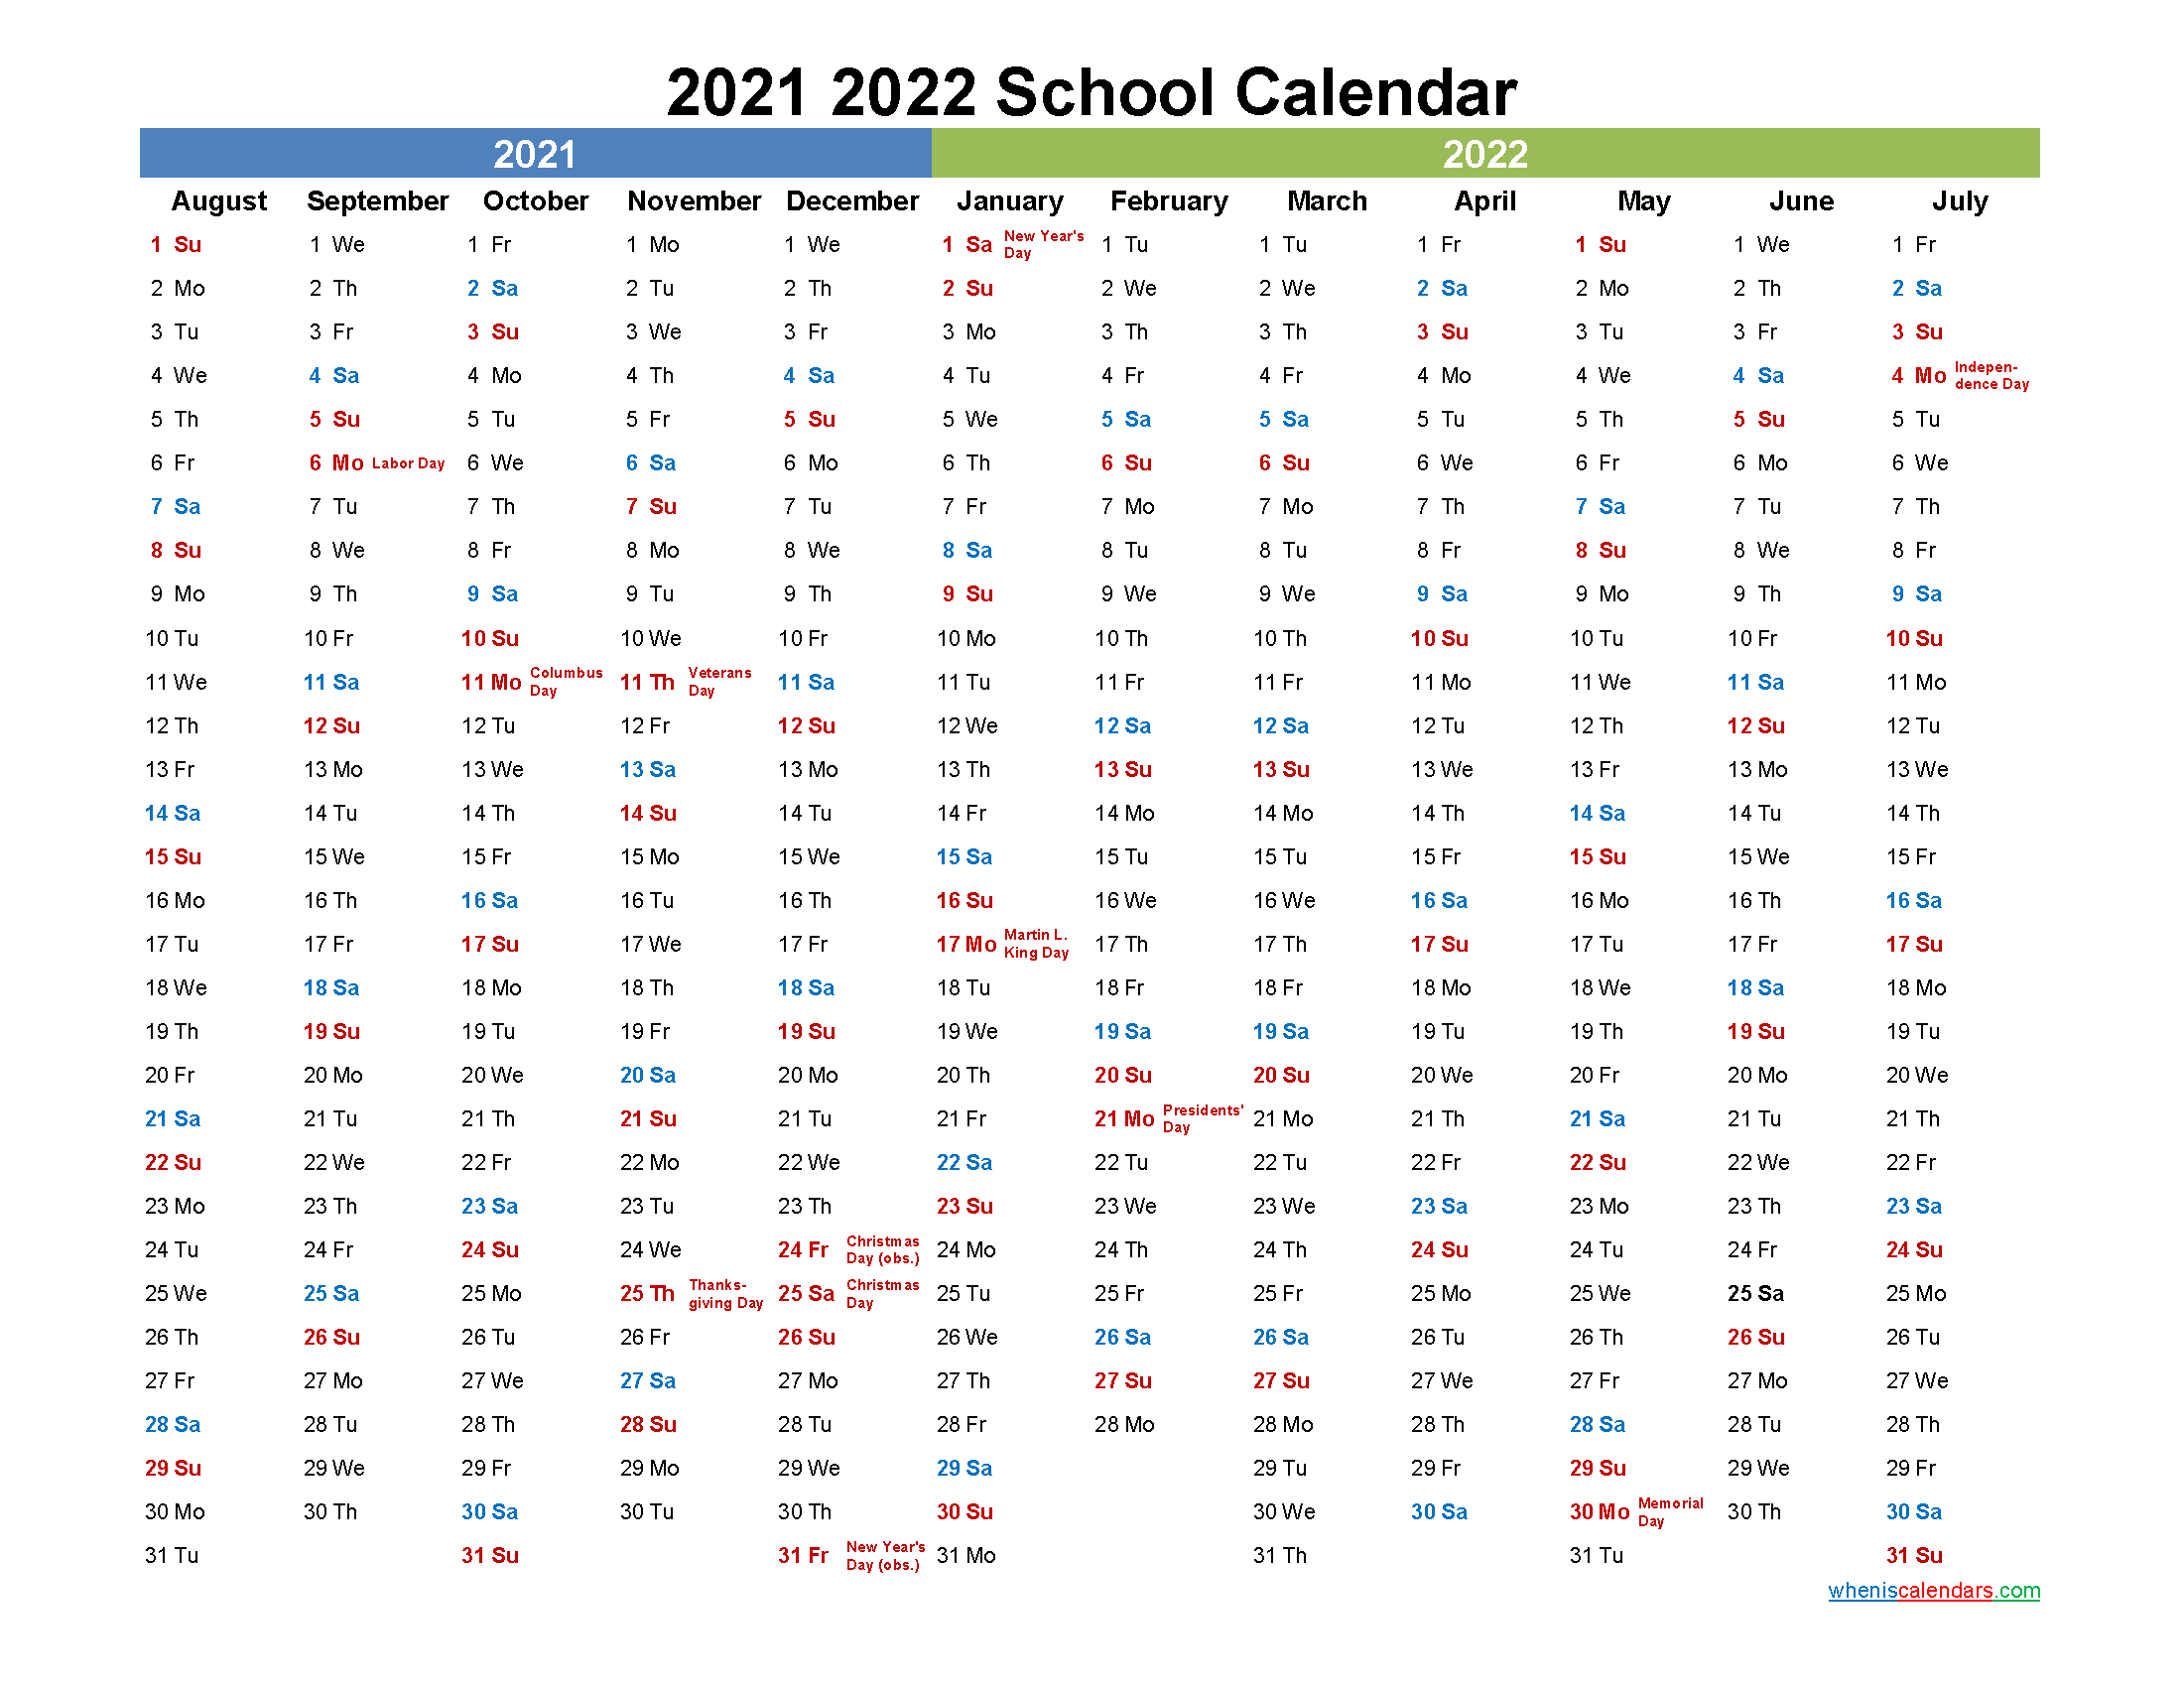 2021 and 2022 School Calendar Printable - Template No.22scl21